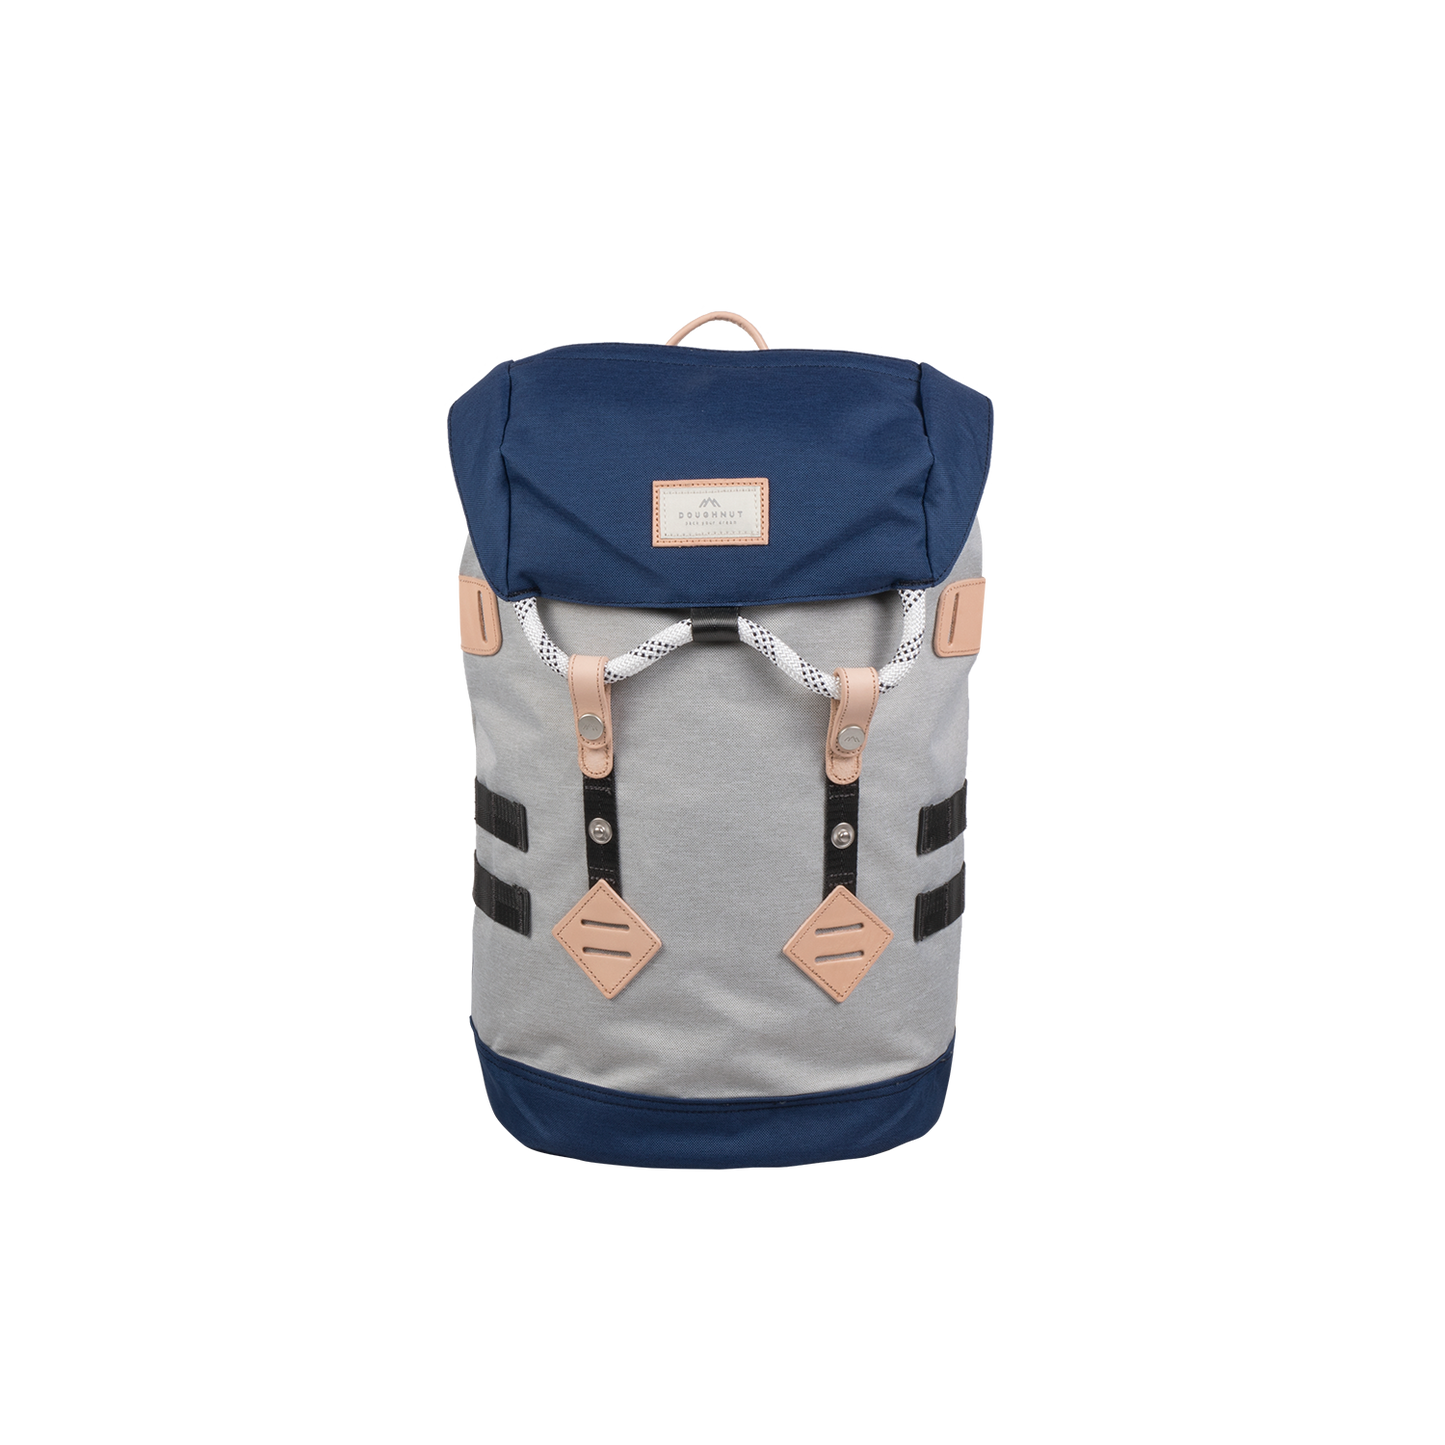 Colorado Small Backpack